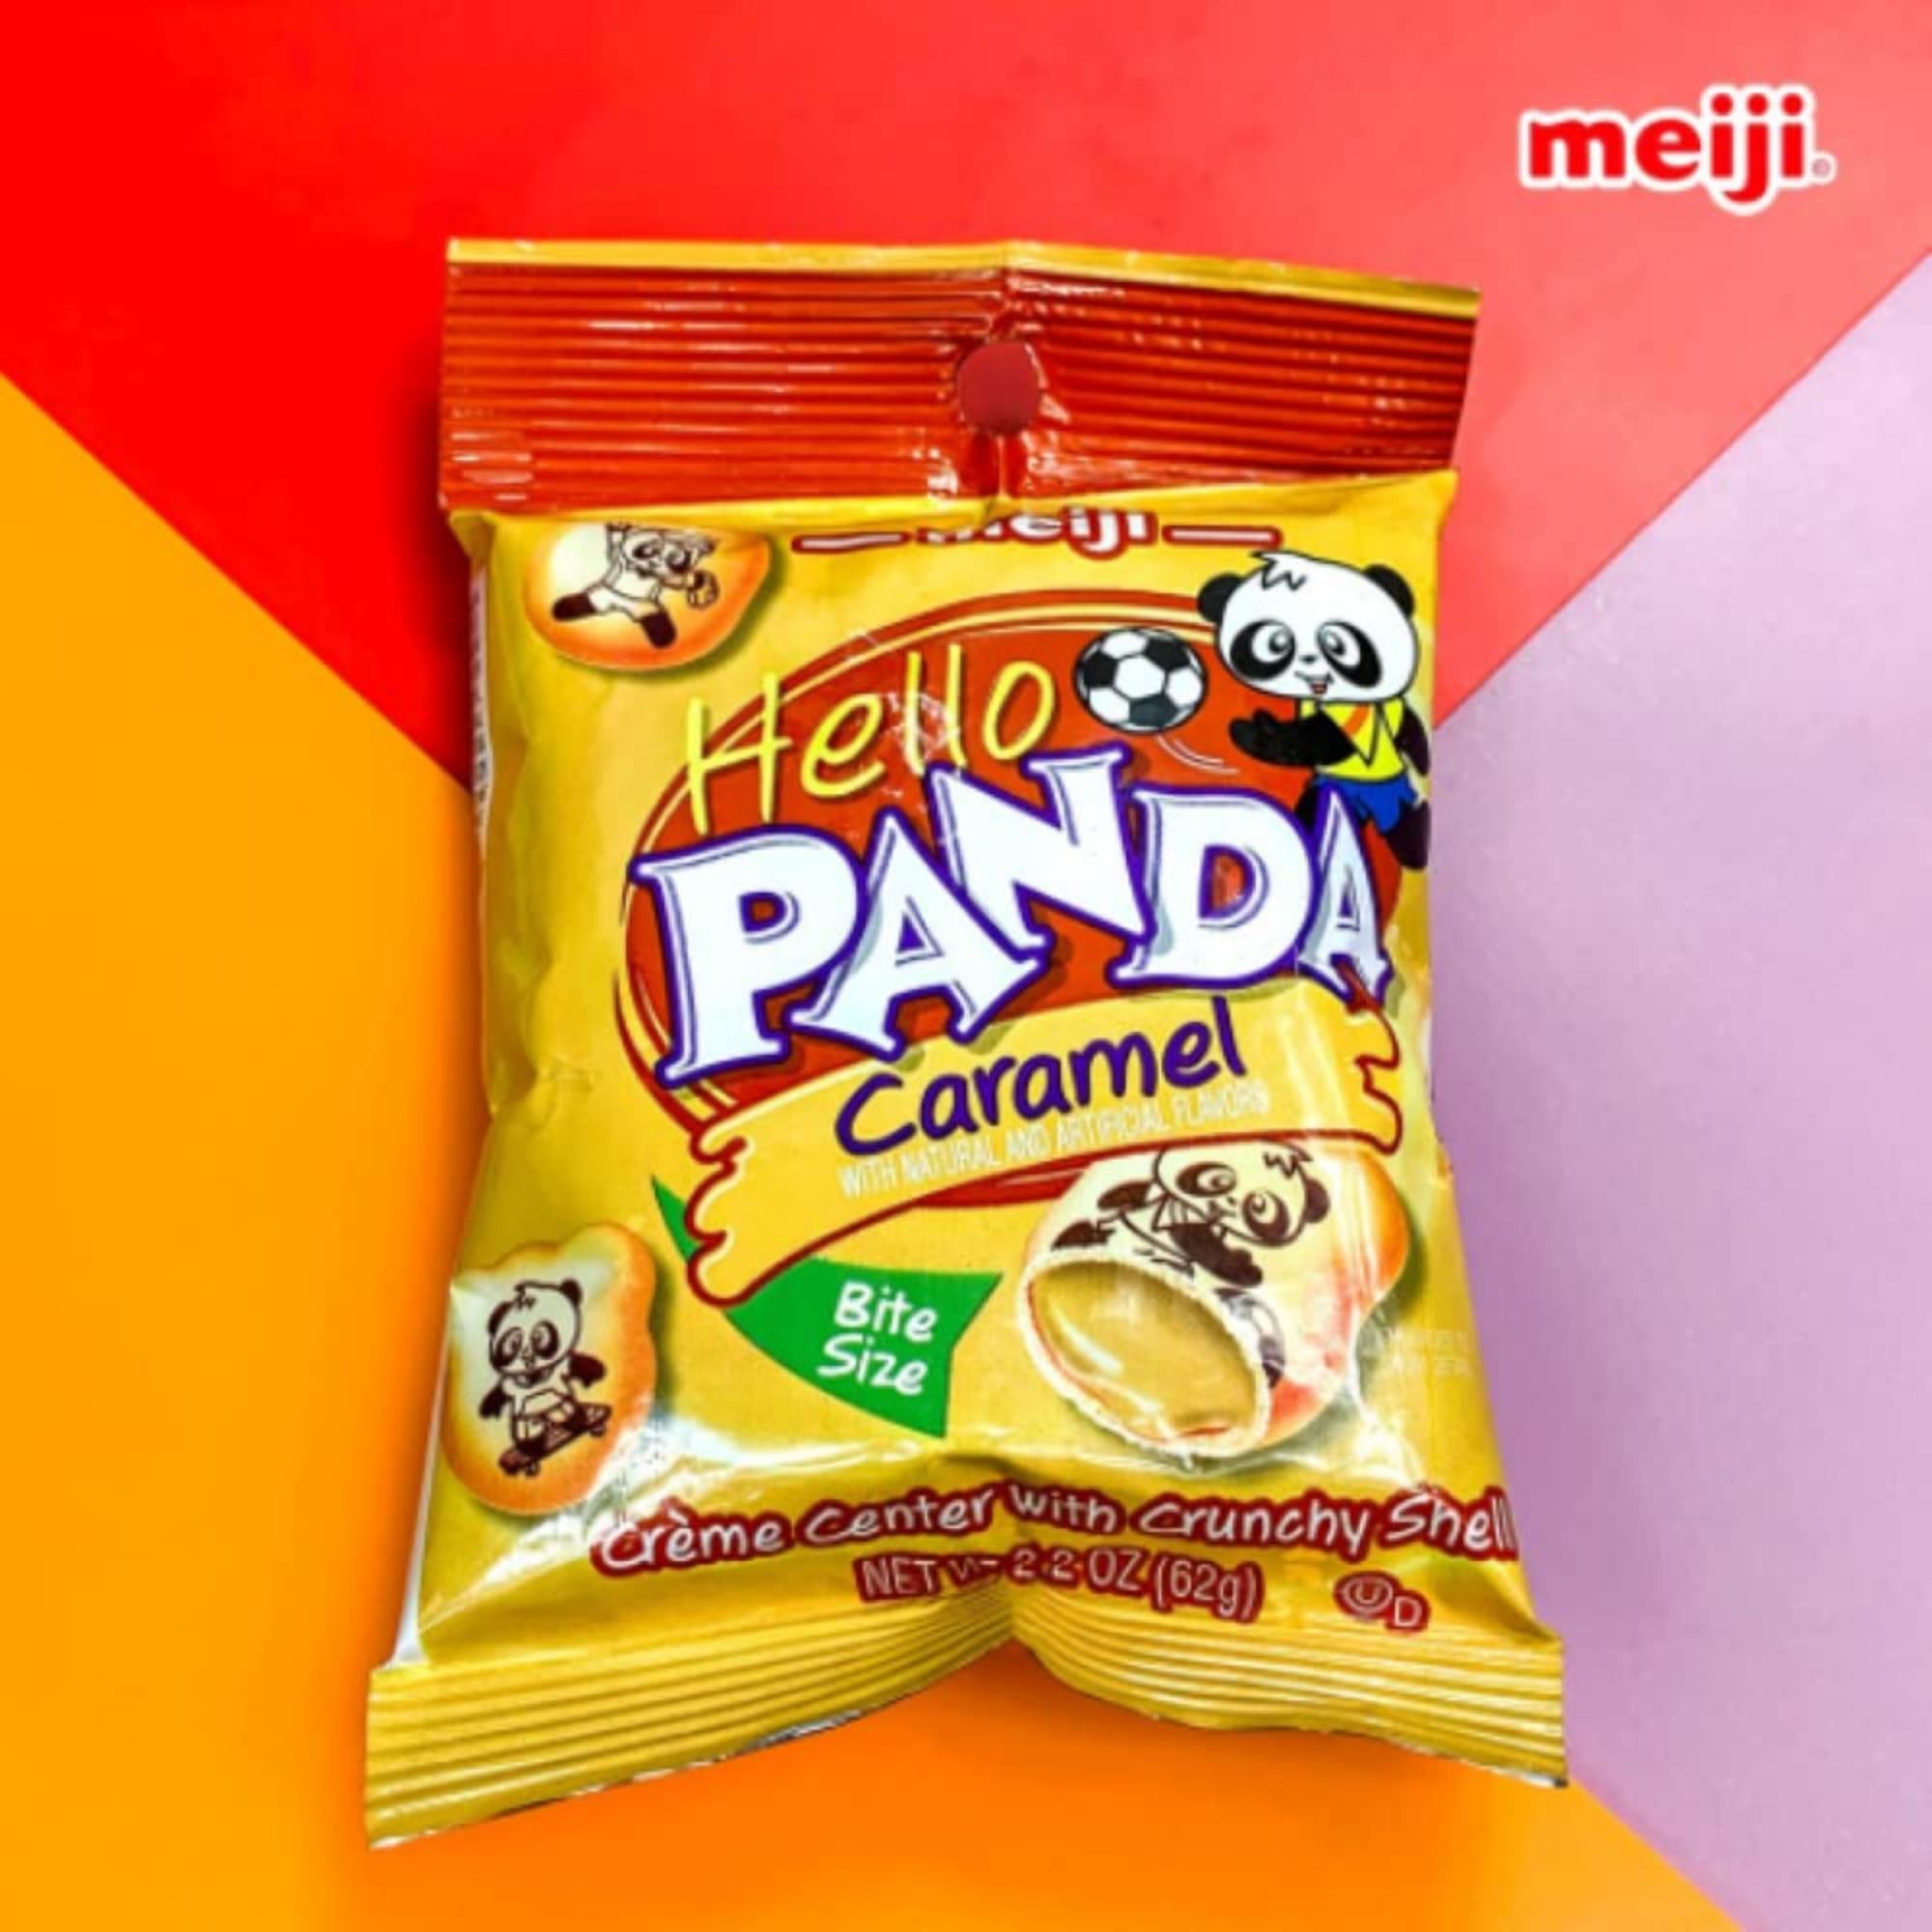 5 pack) Meiji Hello Panda Cookies, Chocolate Creme, 2.1 Oz 